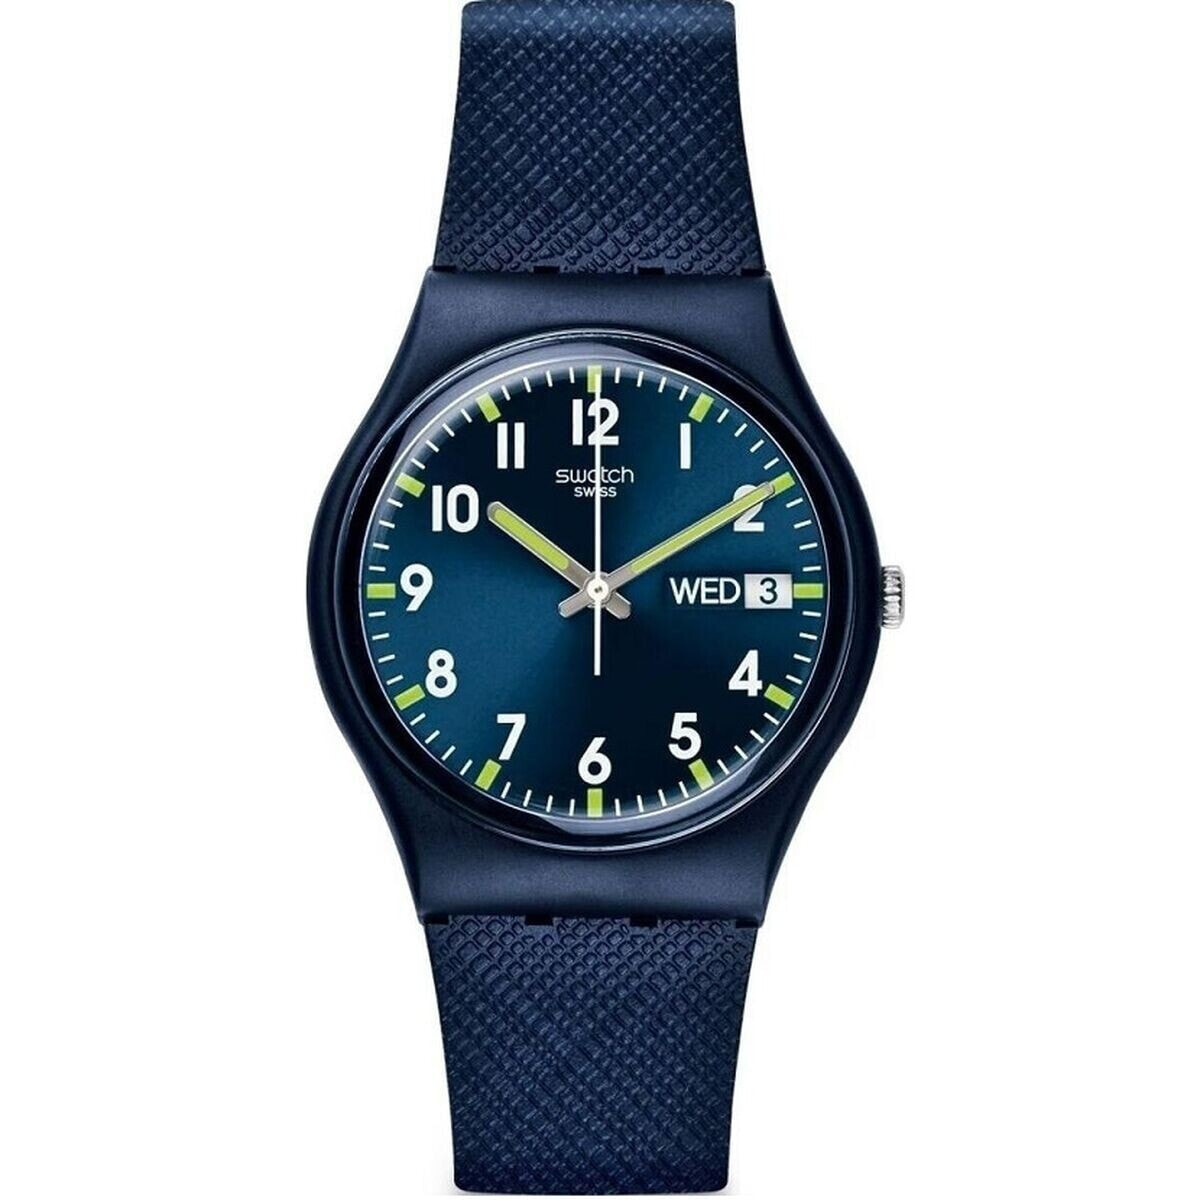 Часы свотч каталог. Часы Swatch gn718. Swatch gb753. Часы Swatch gb753. Часы Swatch Swiss мужские.